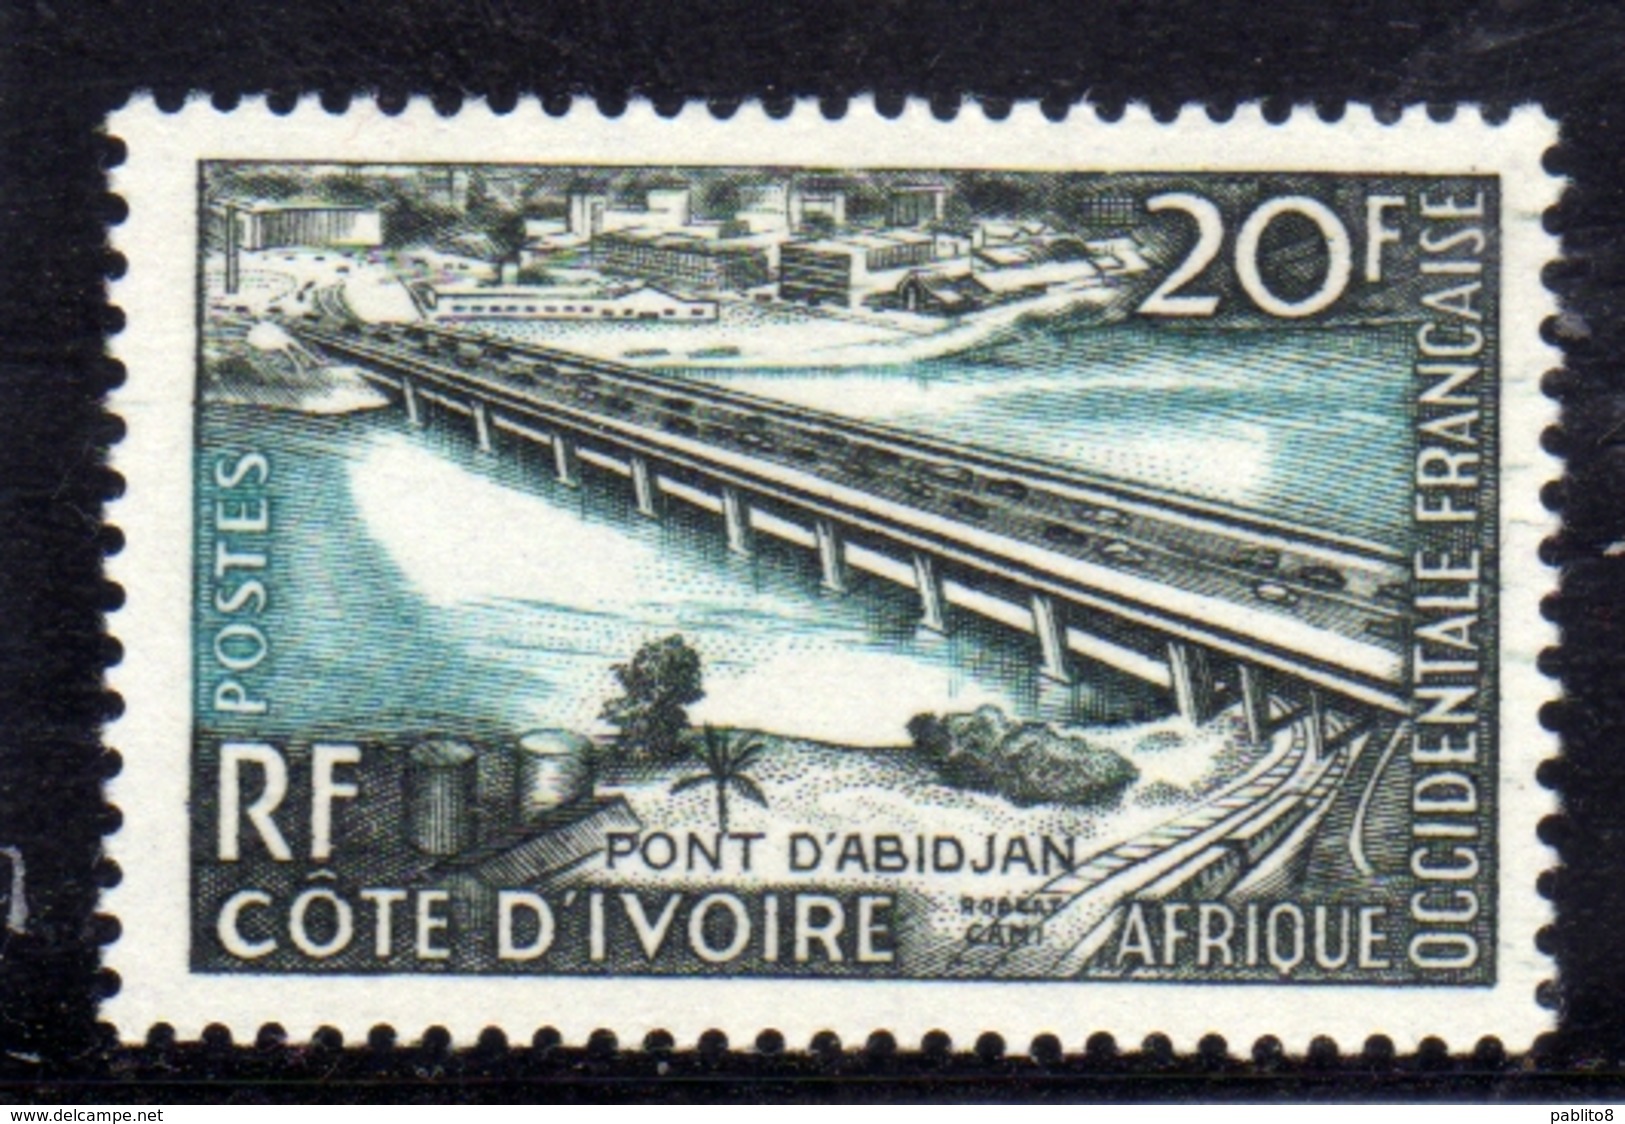 IVORY COAST COSTA D'AVORIO COTE D'IVOIRE 1958 PONT D'ABIDJAN BRIDGE 20f MNH - Costa D'Avorio (1960-...)